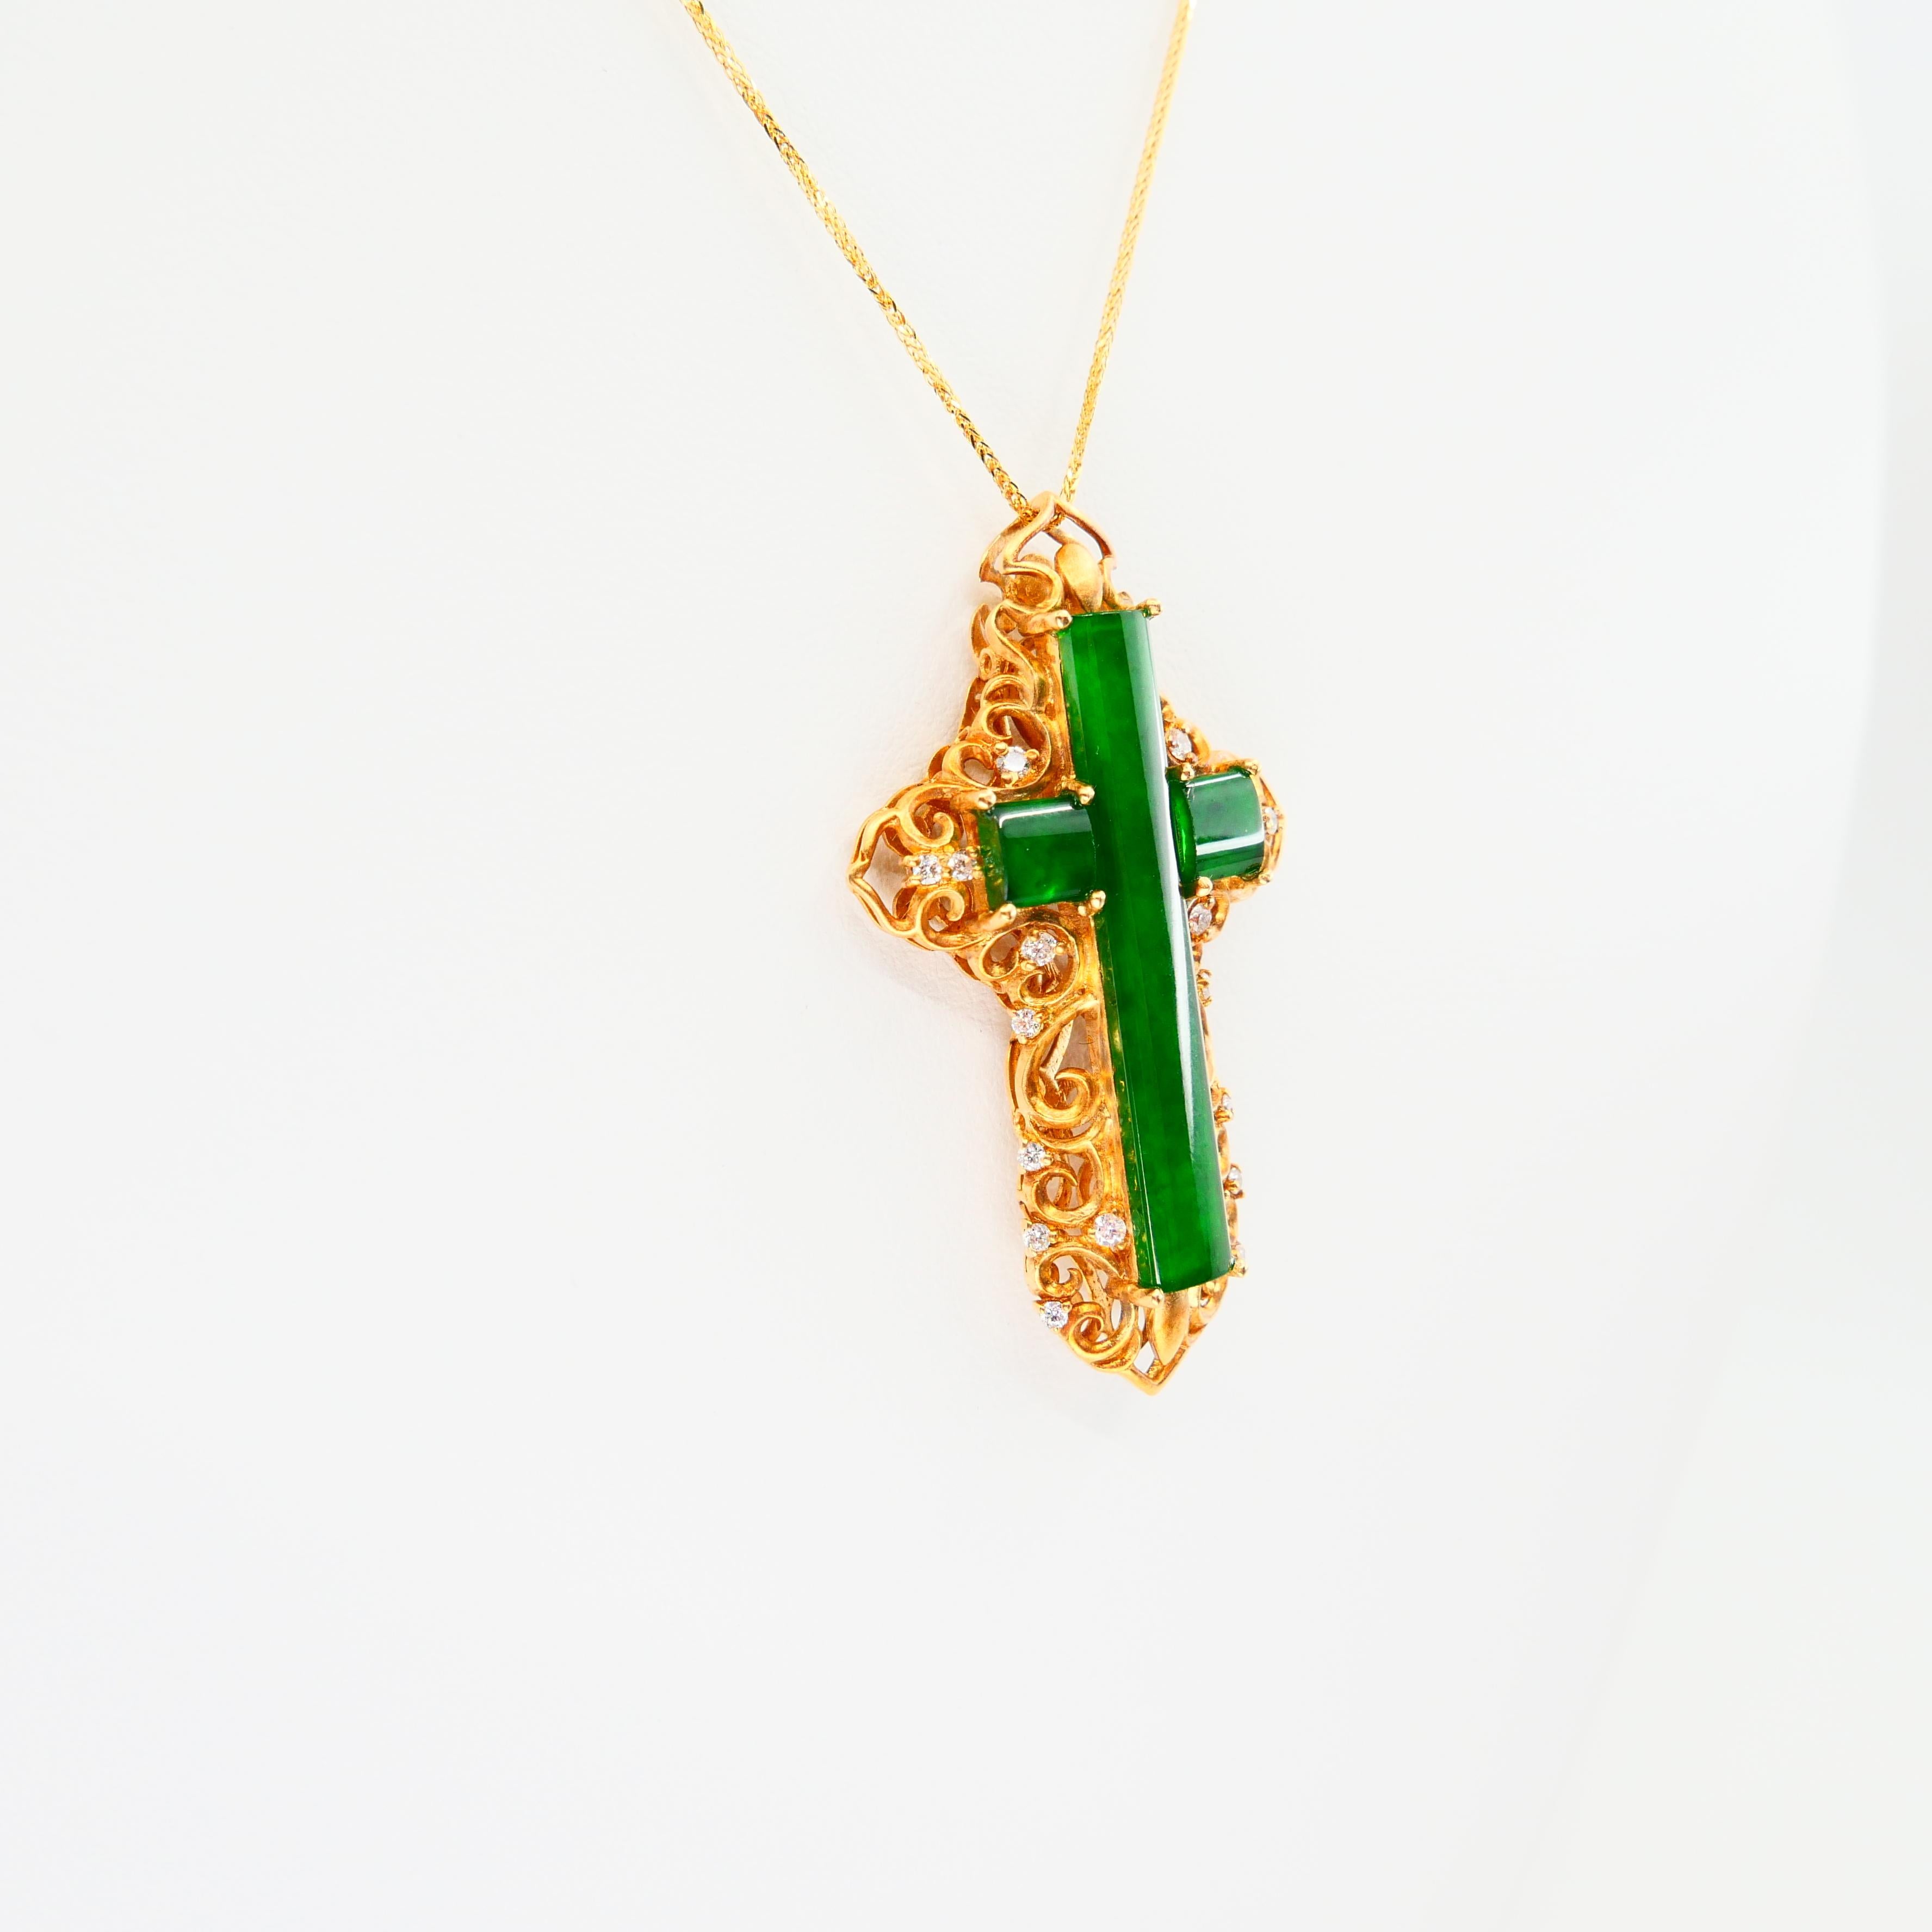 Certified Type A Jade Diamond Cross Pendant Drop Necklace, Intense Vivid Green 2